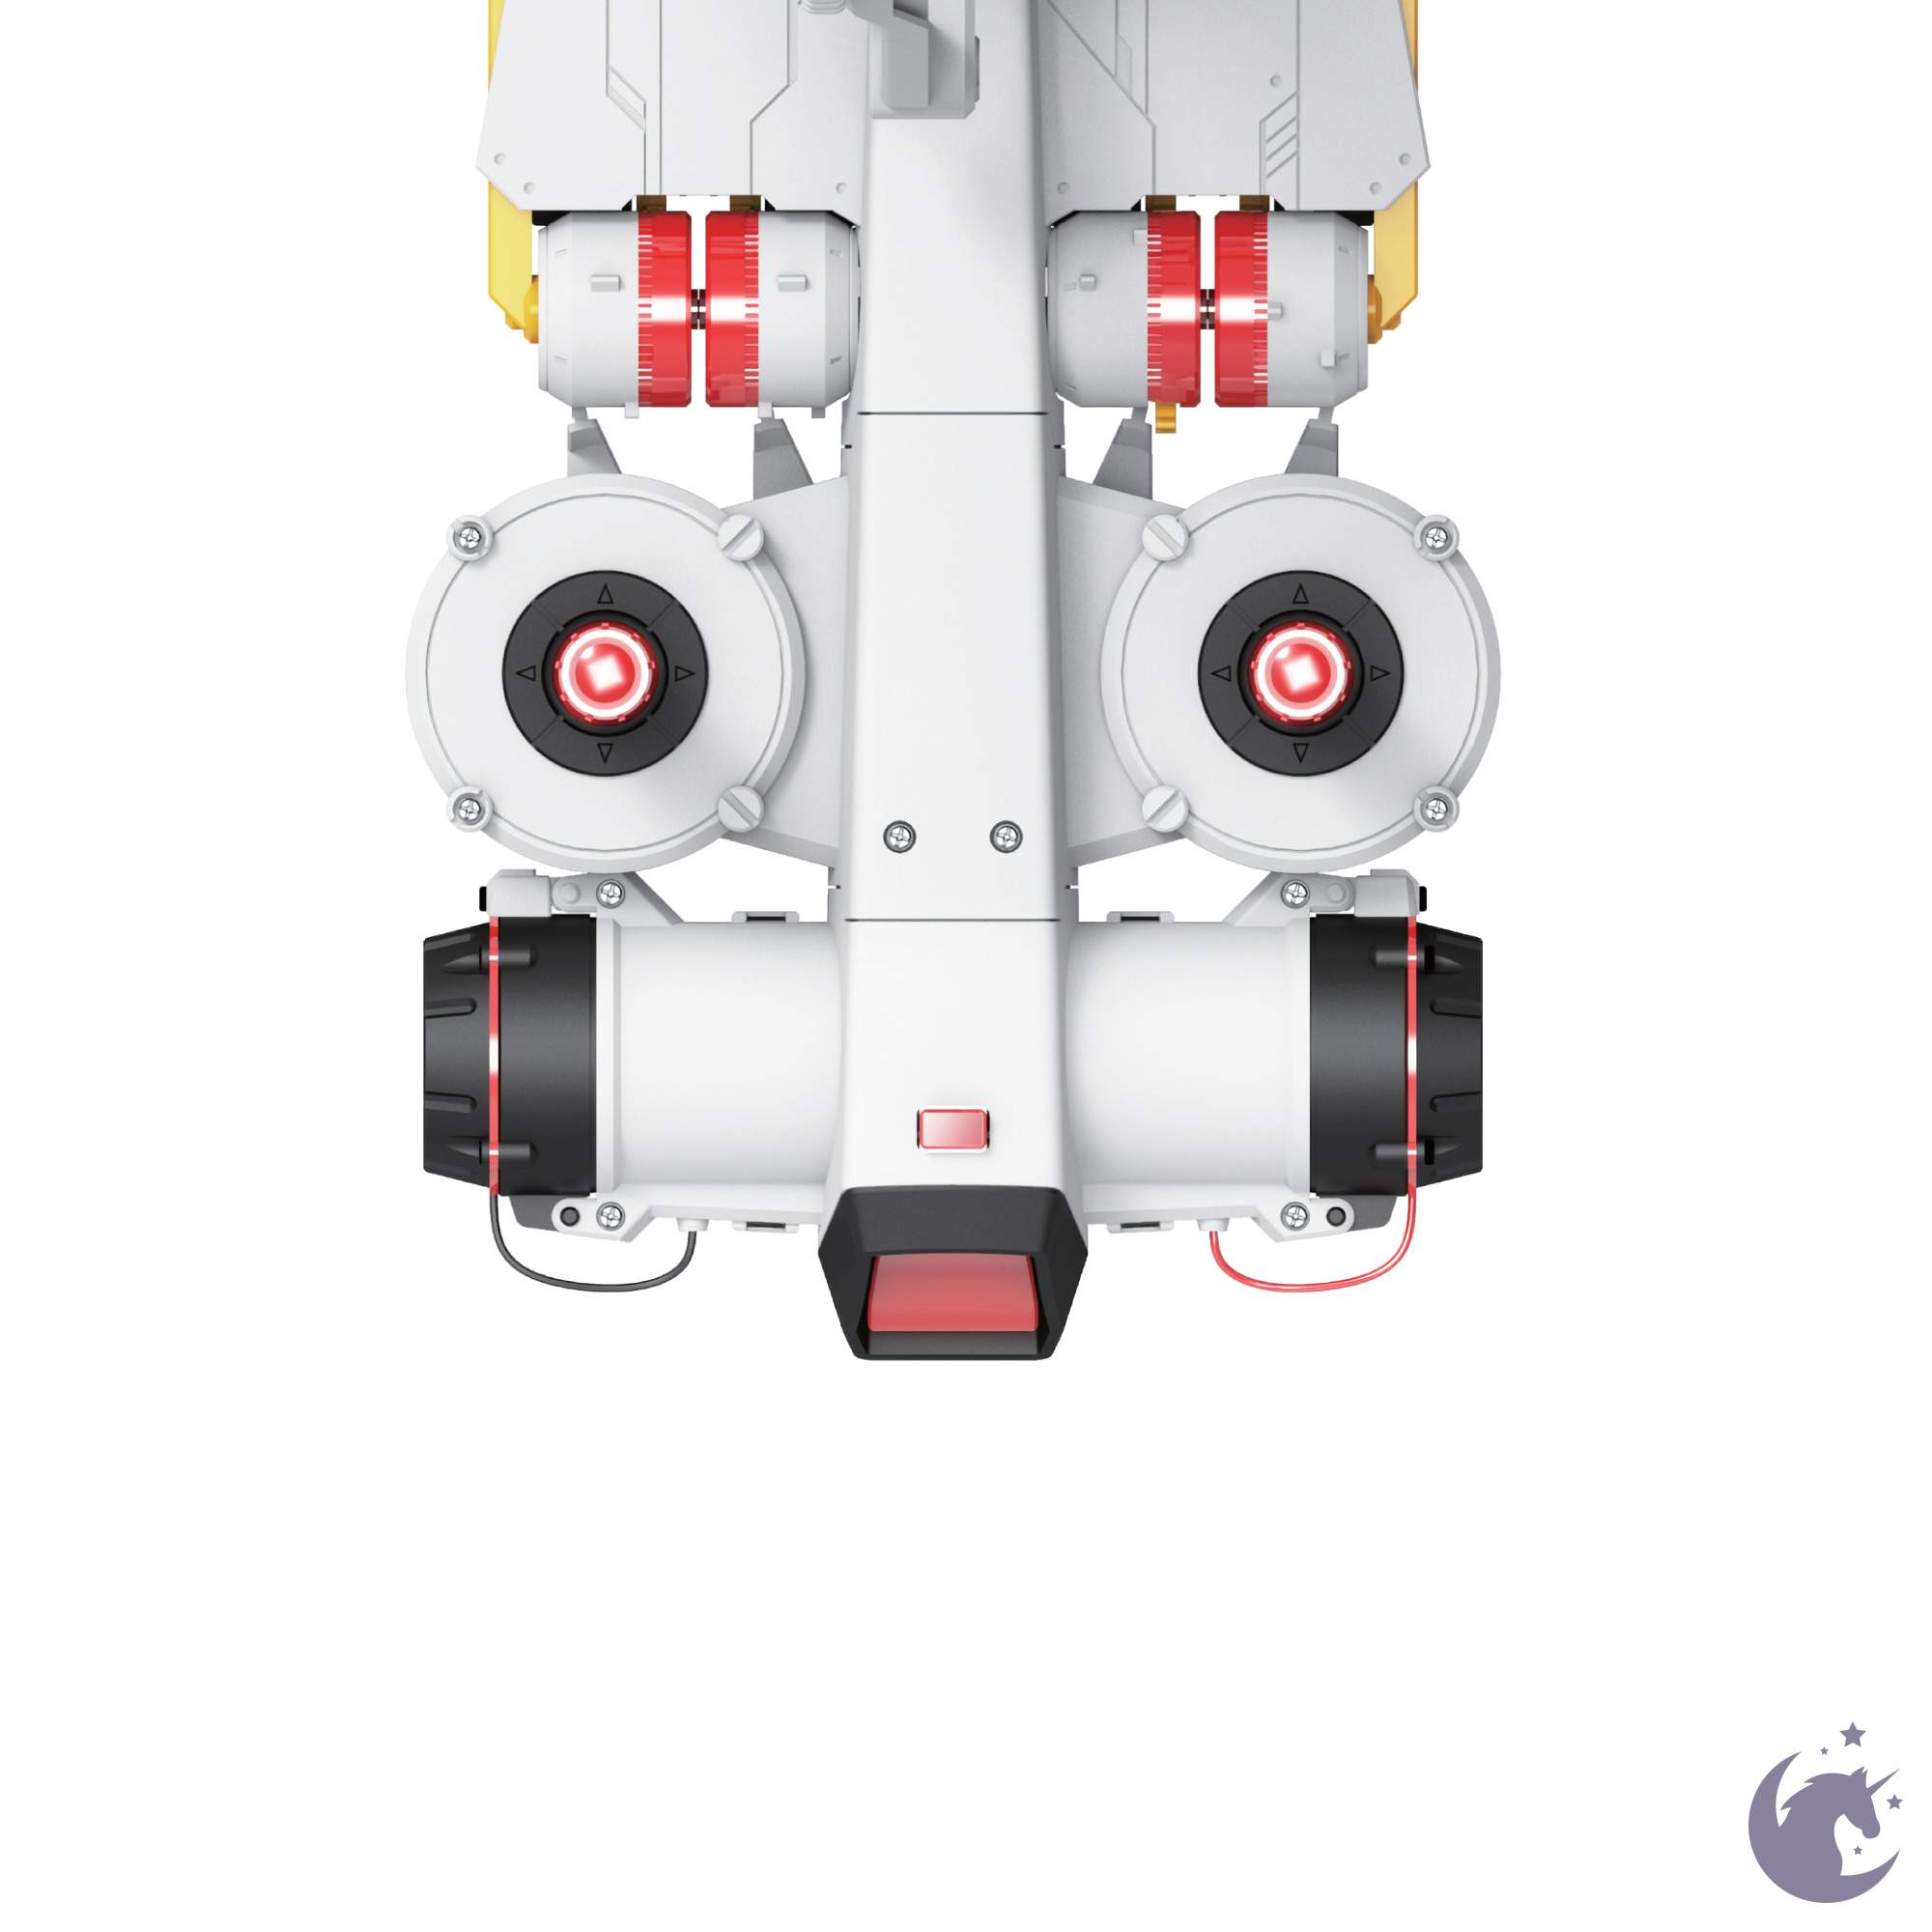 unicorntoys cic kits joystick robotic arm educational robot engineering stem toys for teens CIC21-537